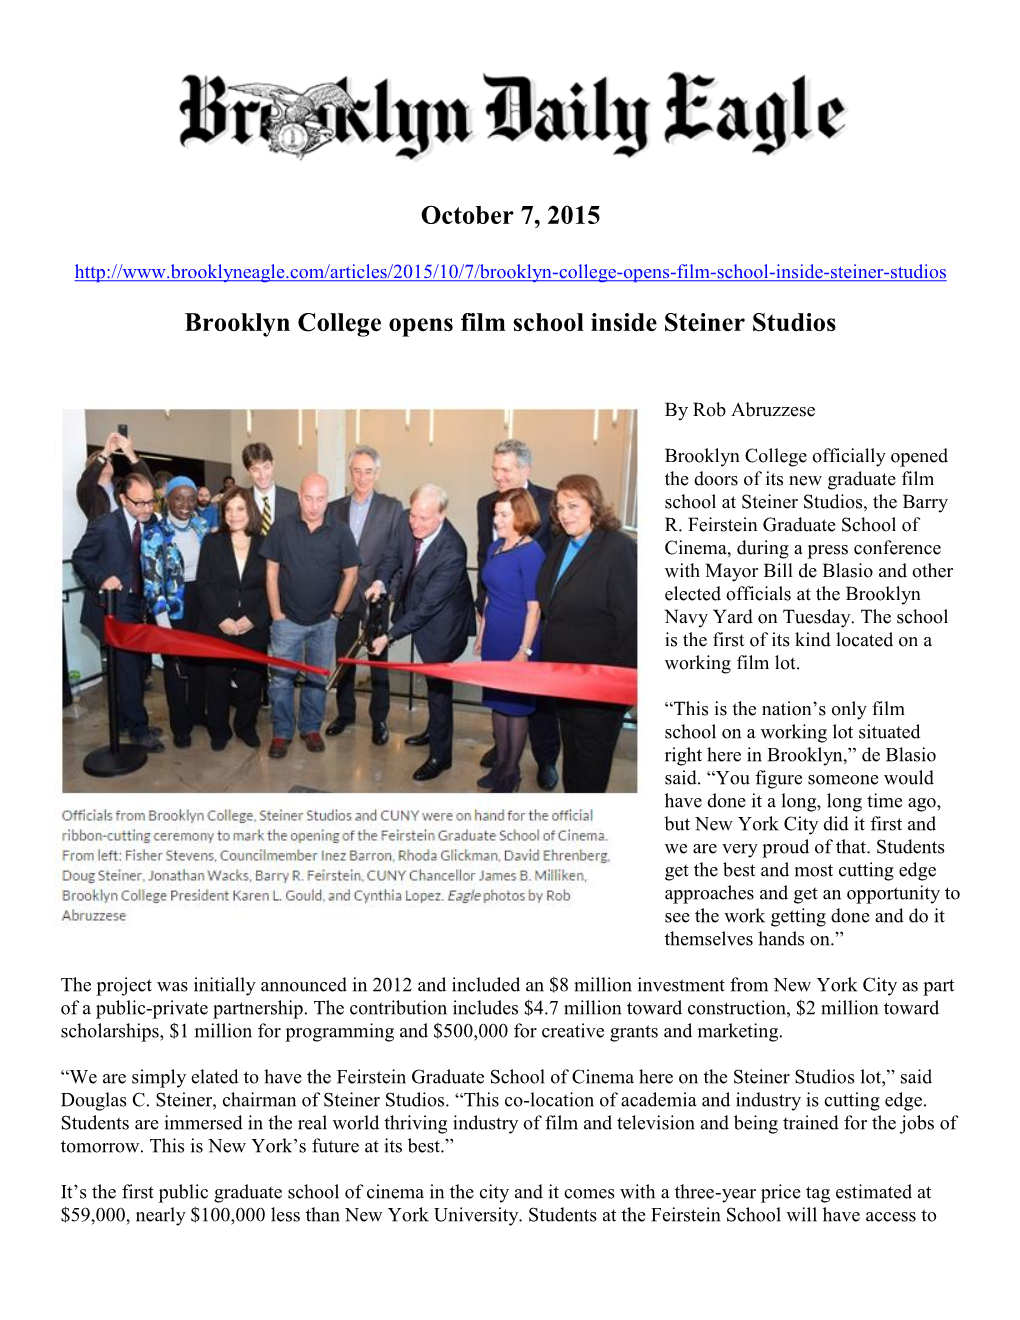 Brooklyn College Opens Film School Inside Steiner Studios